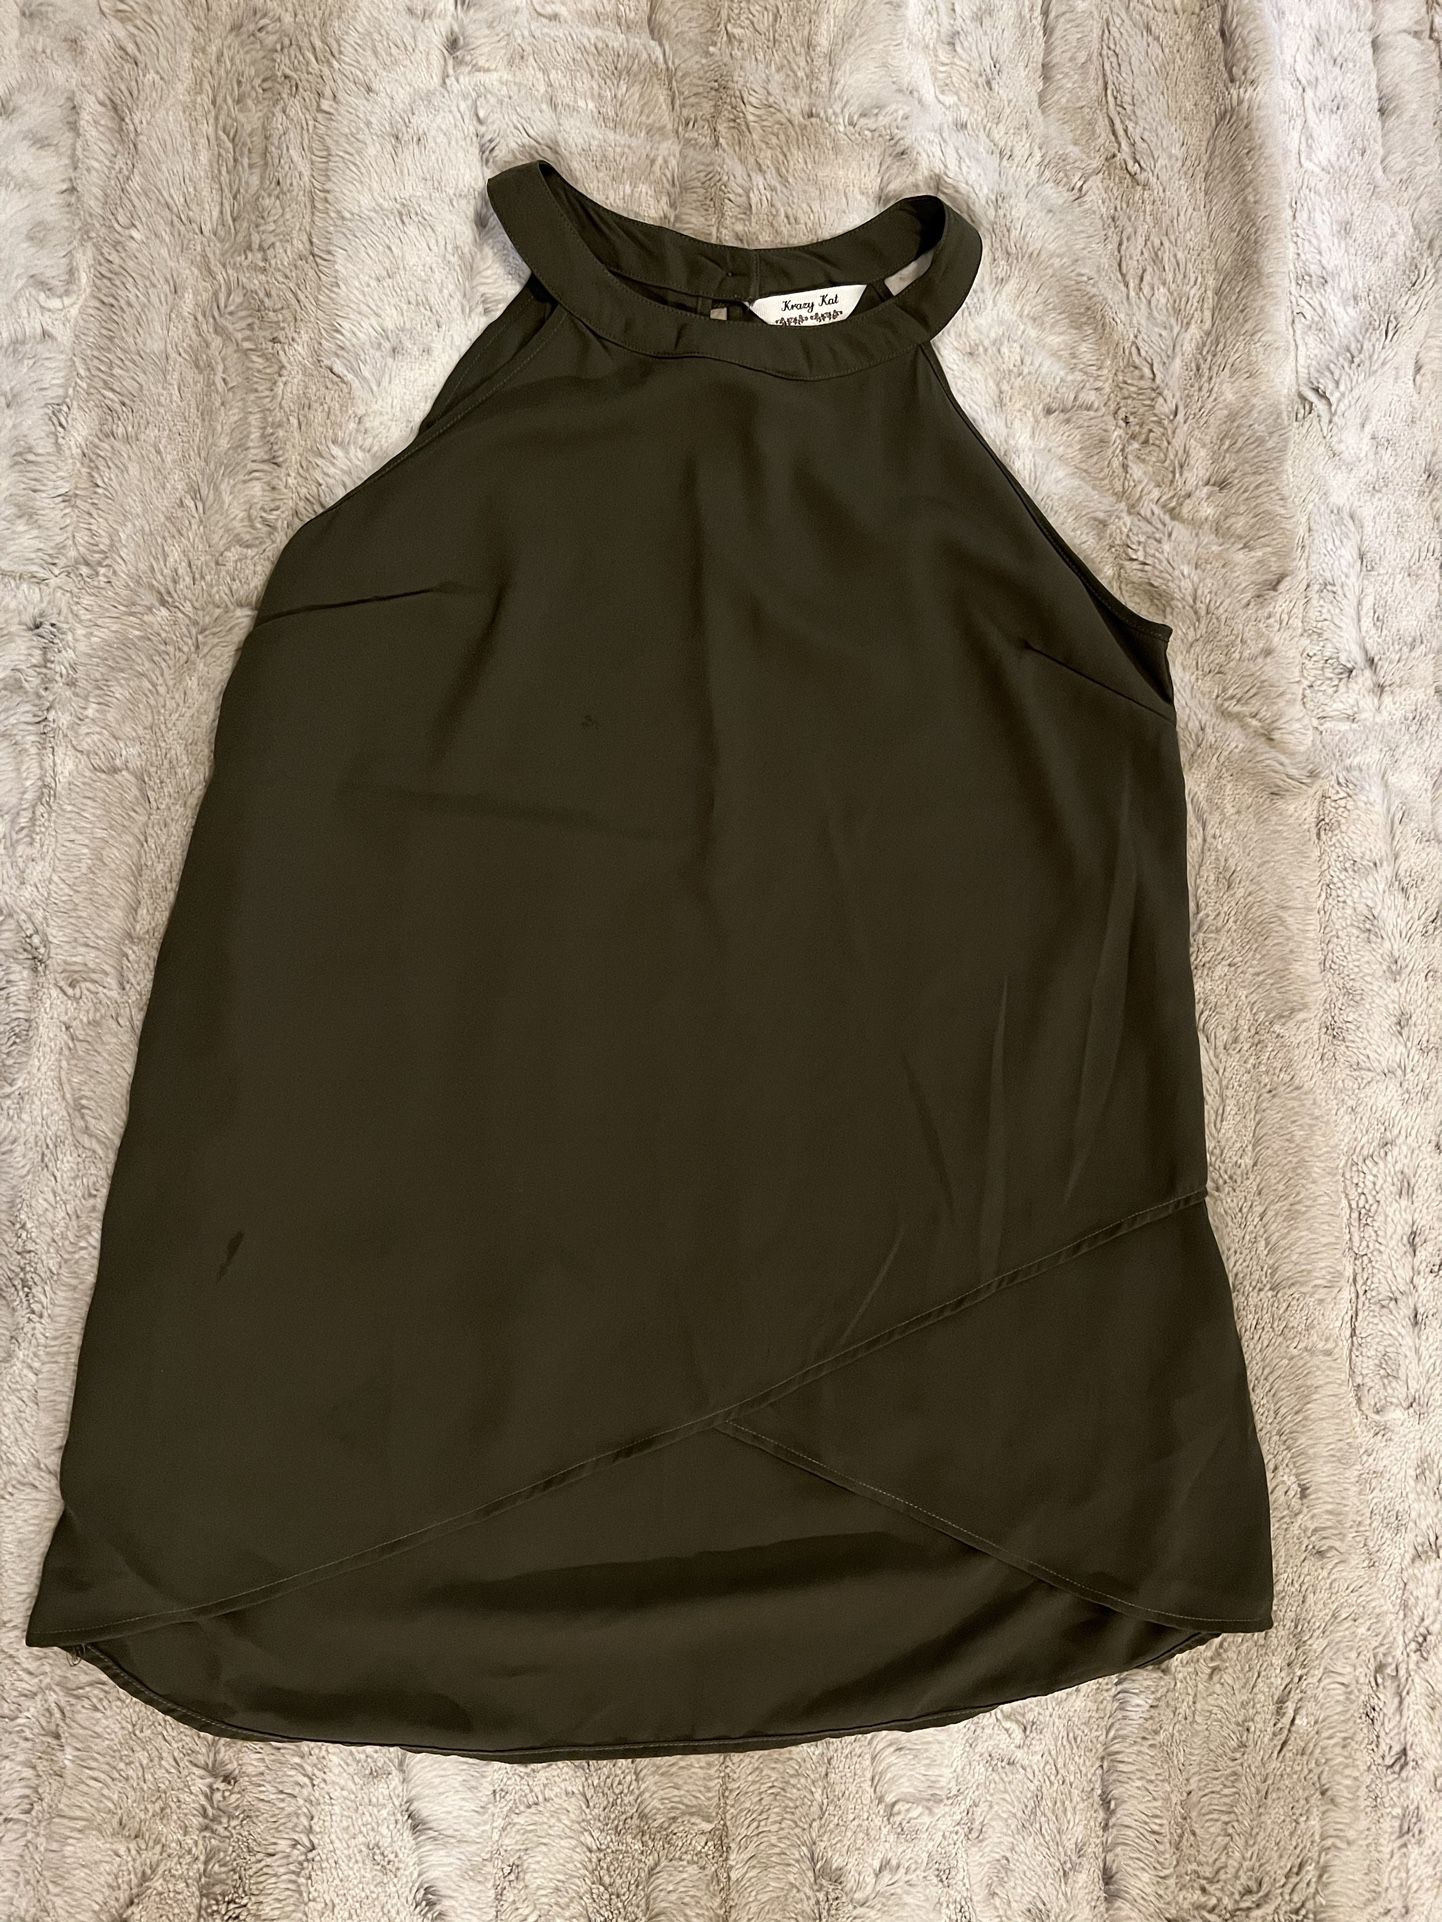 Krazy Kat Sleeveless  Shirt Blouse - Olive Green, Small 